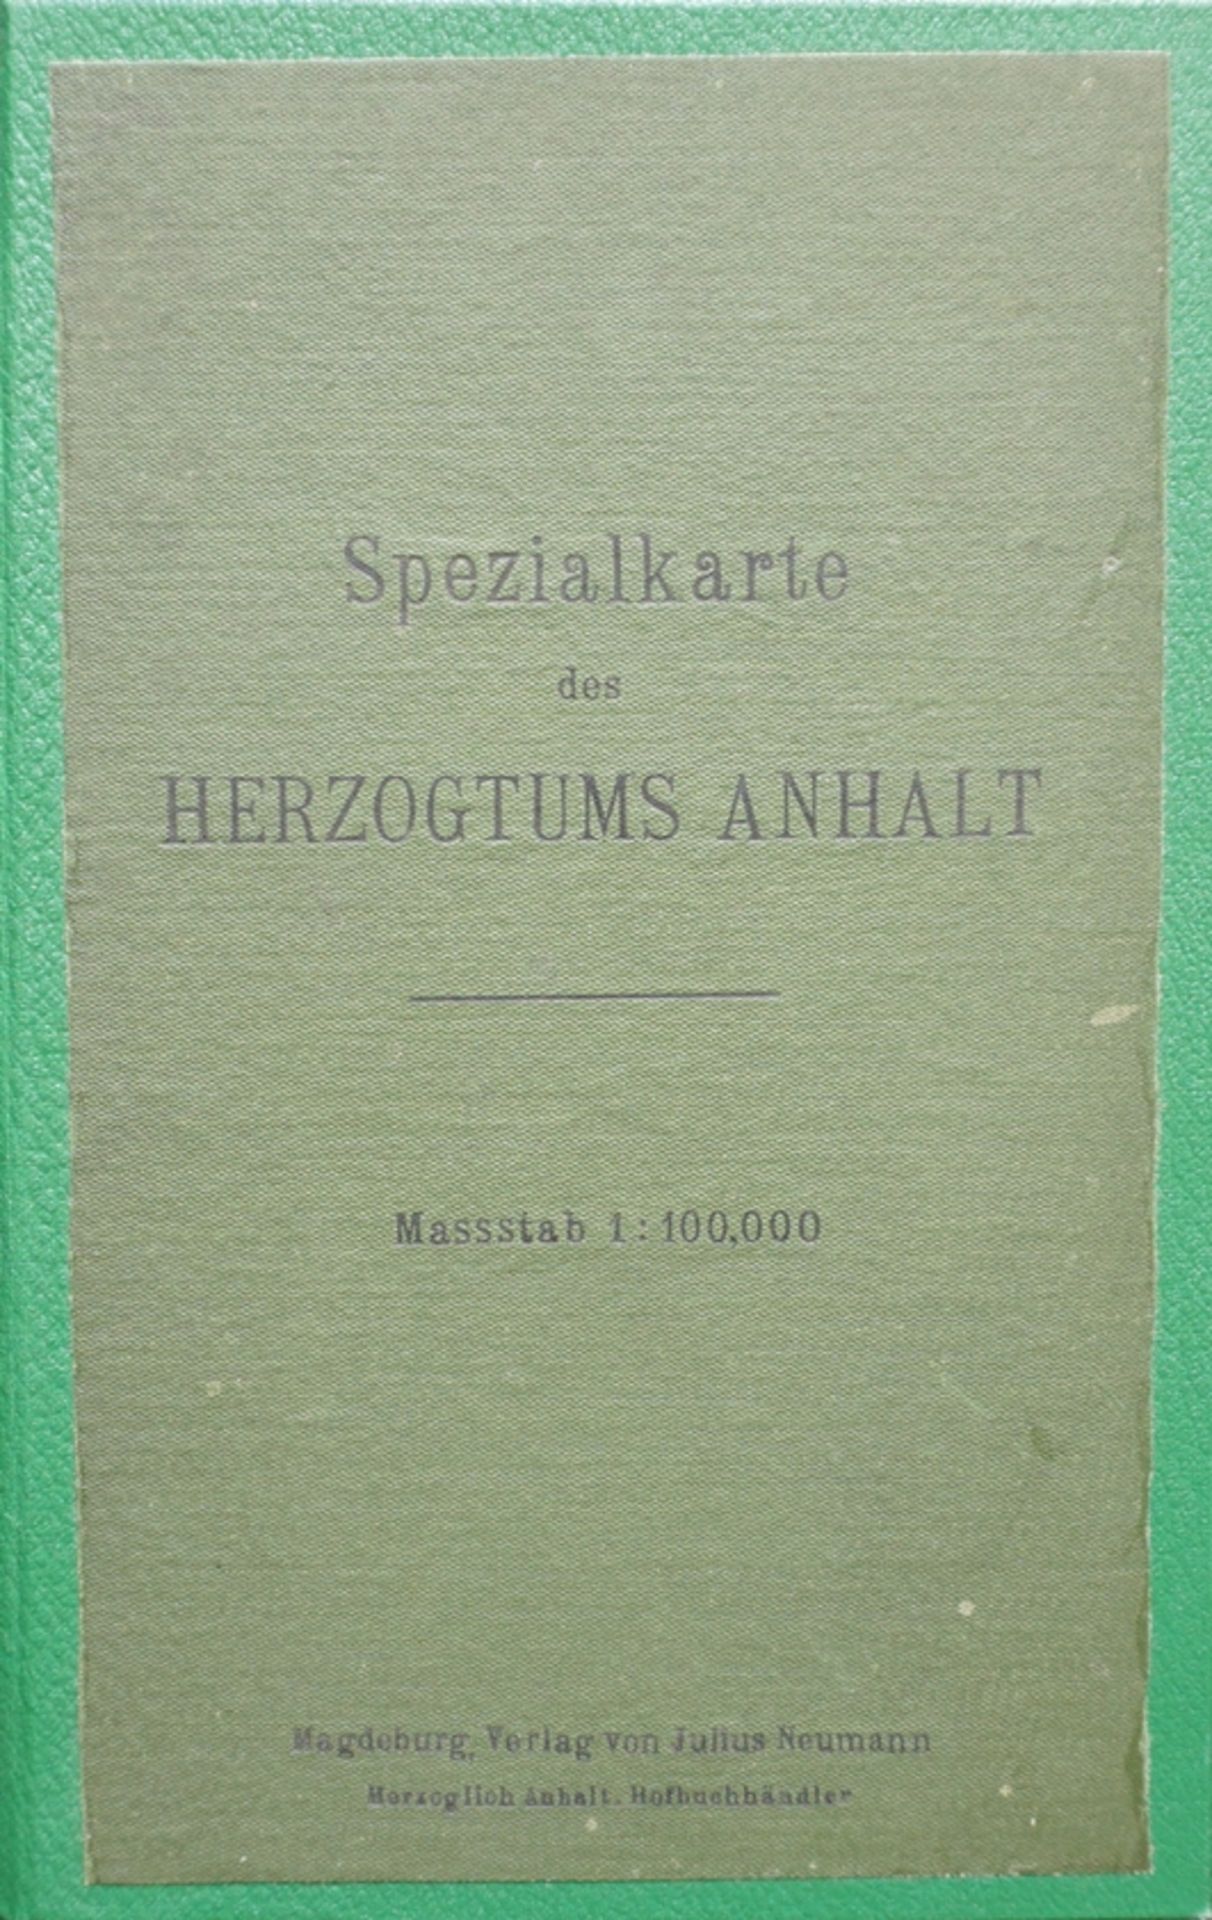 Spezialkarte des Herzogtums Anhalt, um 1900 - Image 2 of 2